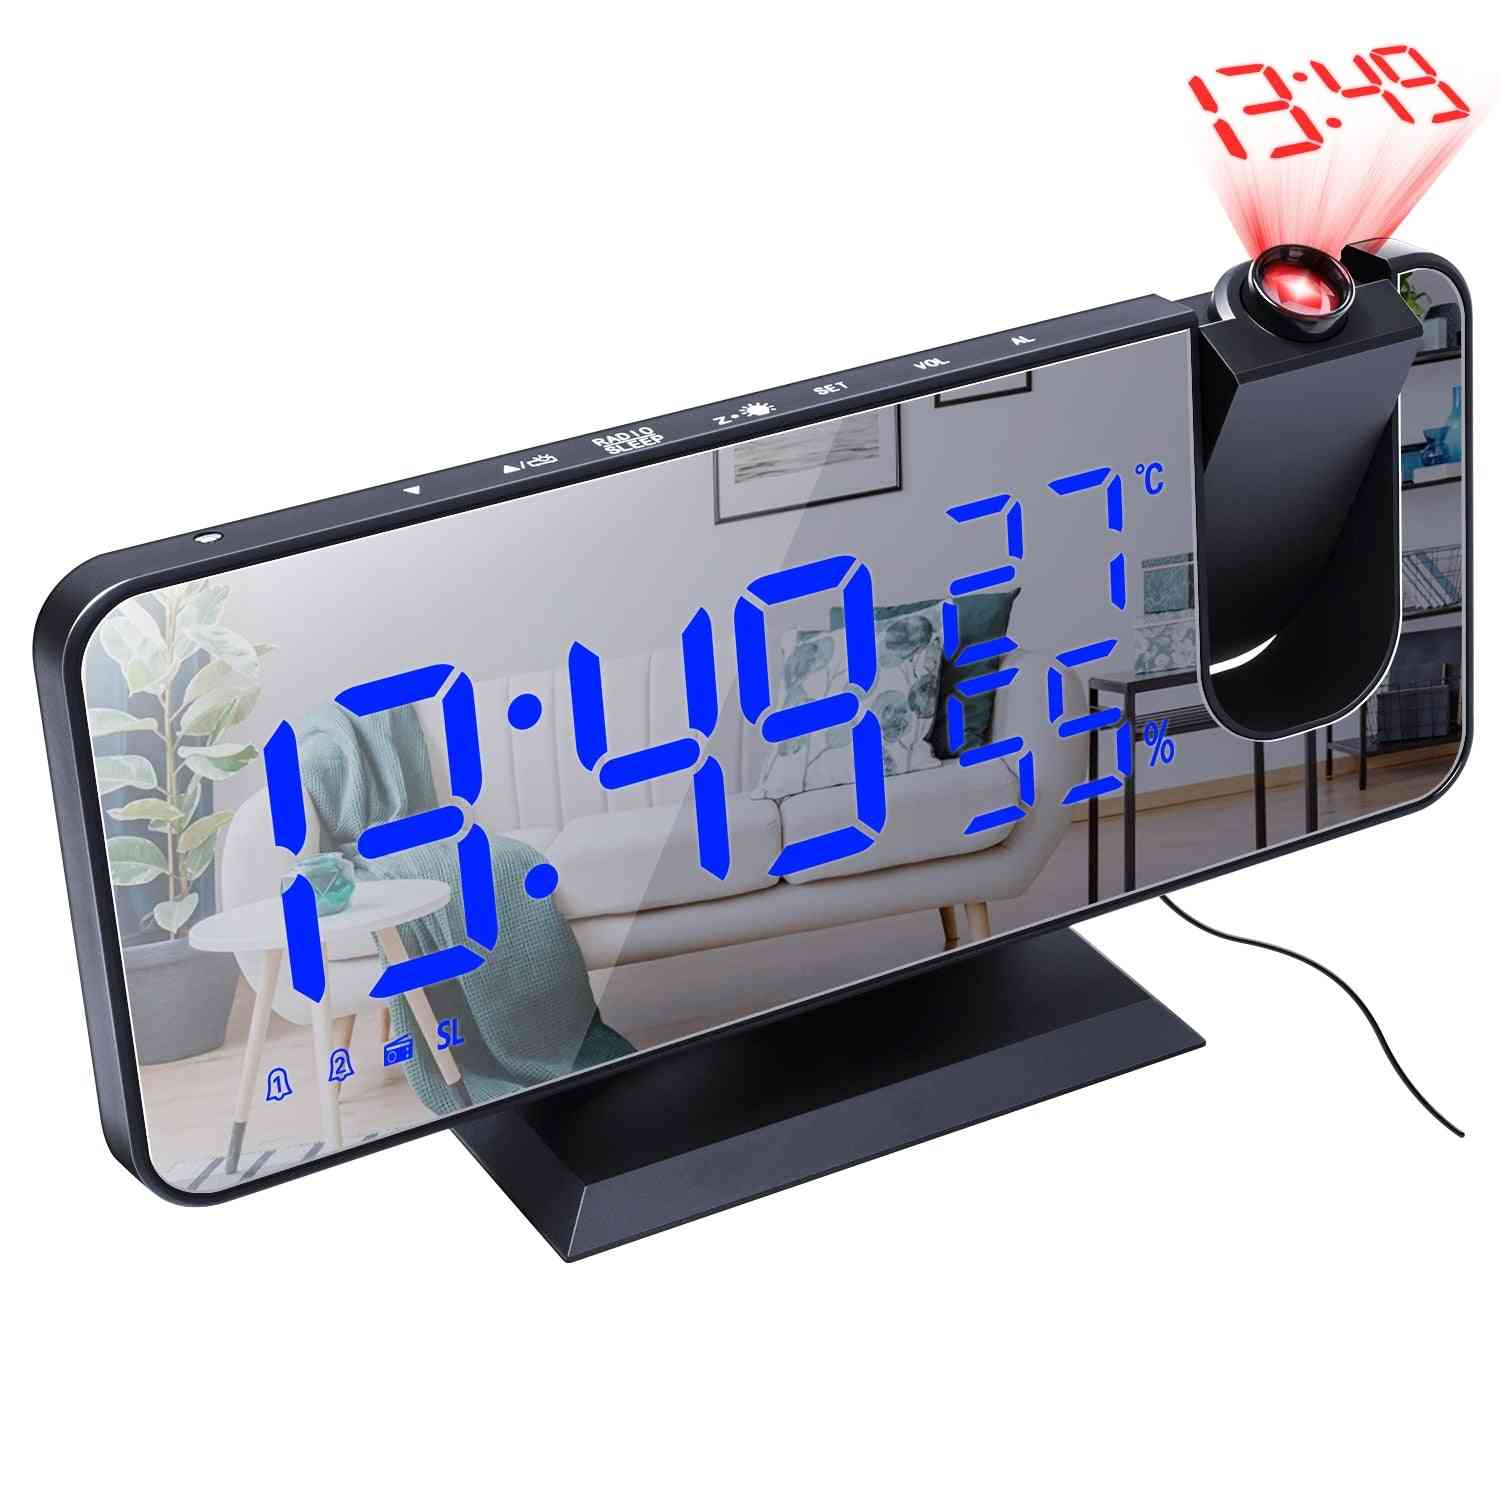 Led Digital Alarm, Watch Table- Electronic Desktop, Usb Wake-up, Fm Radio, Time Projector Function